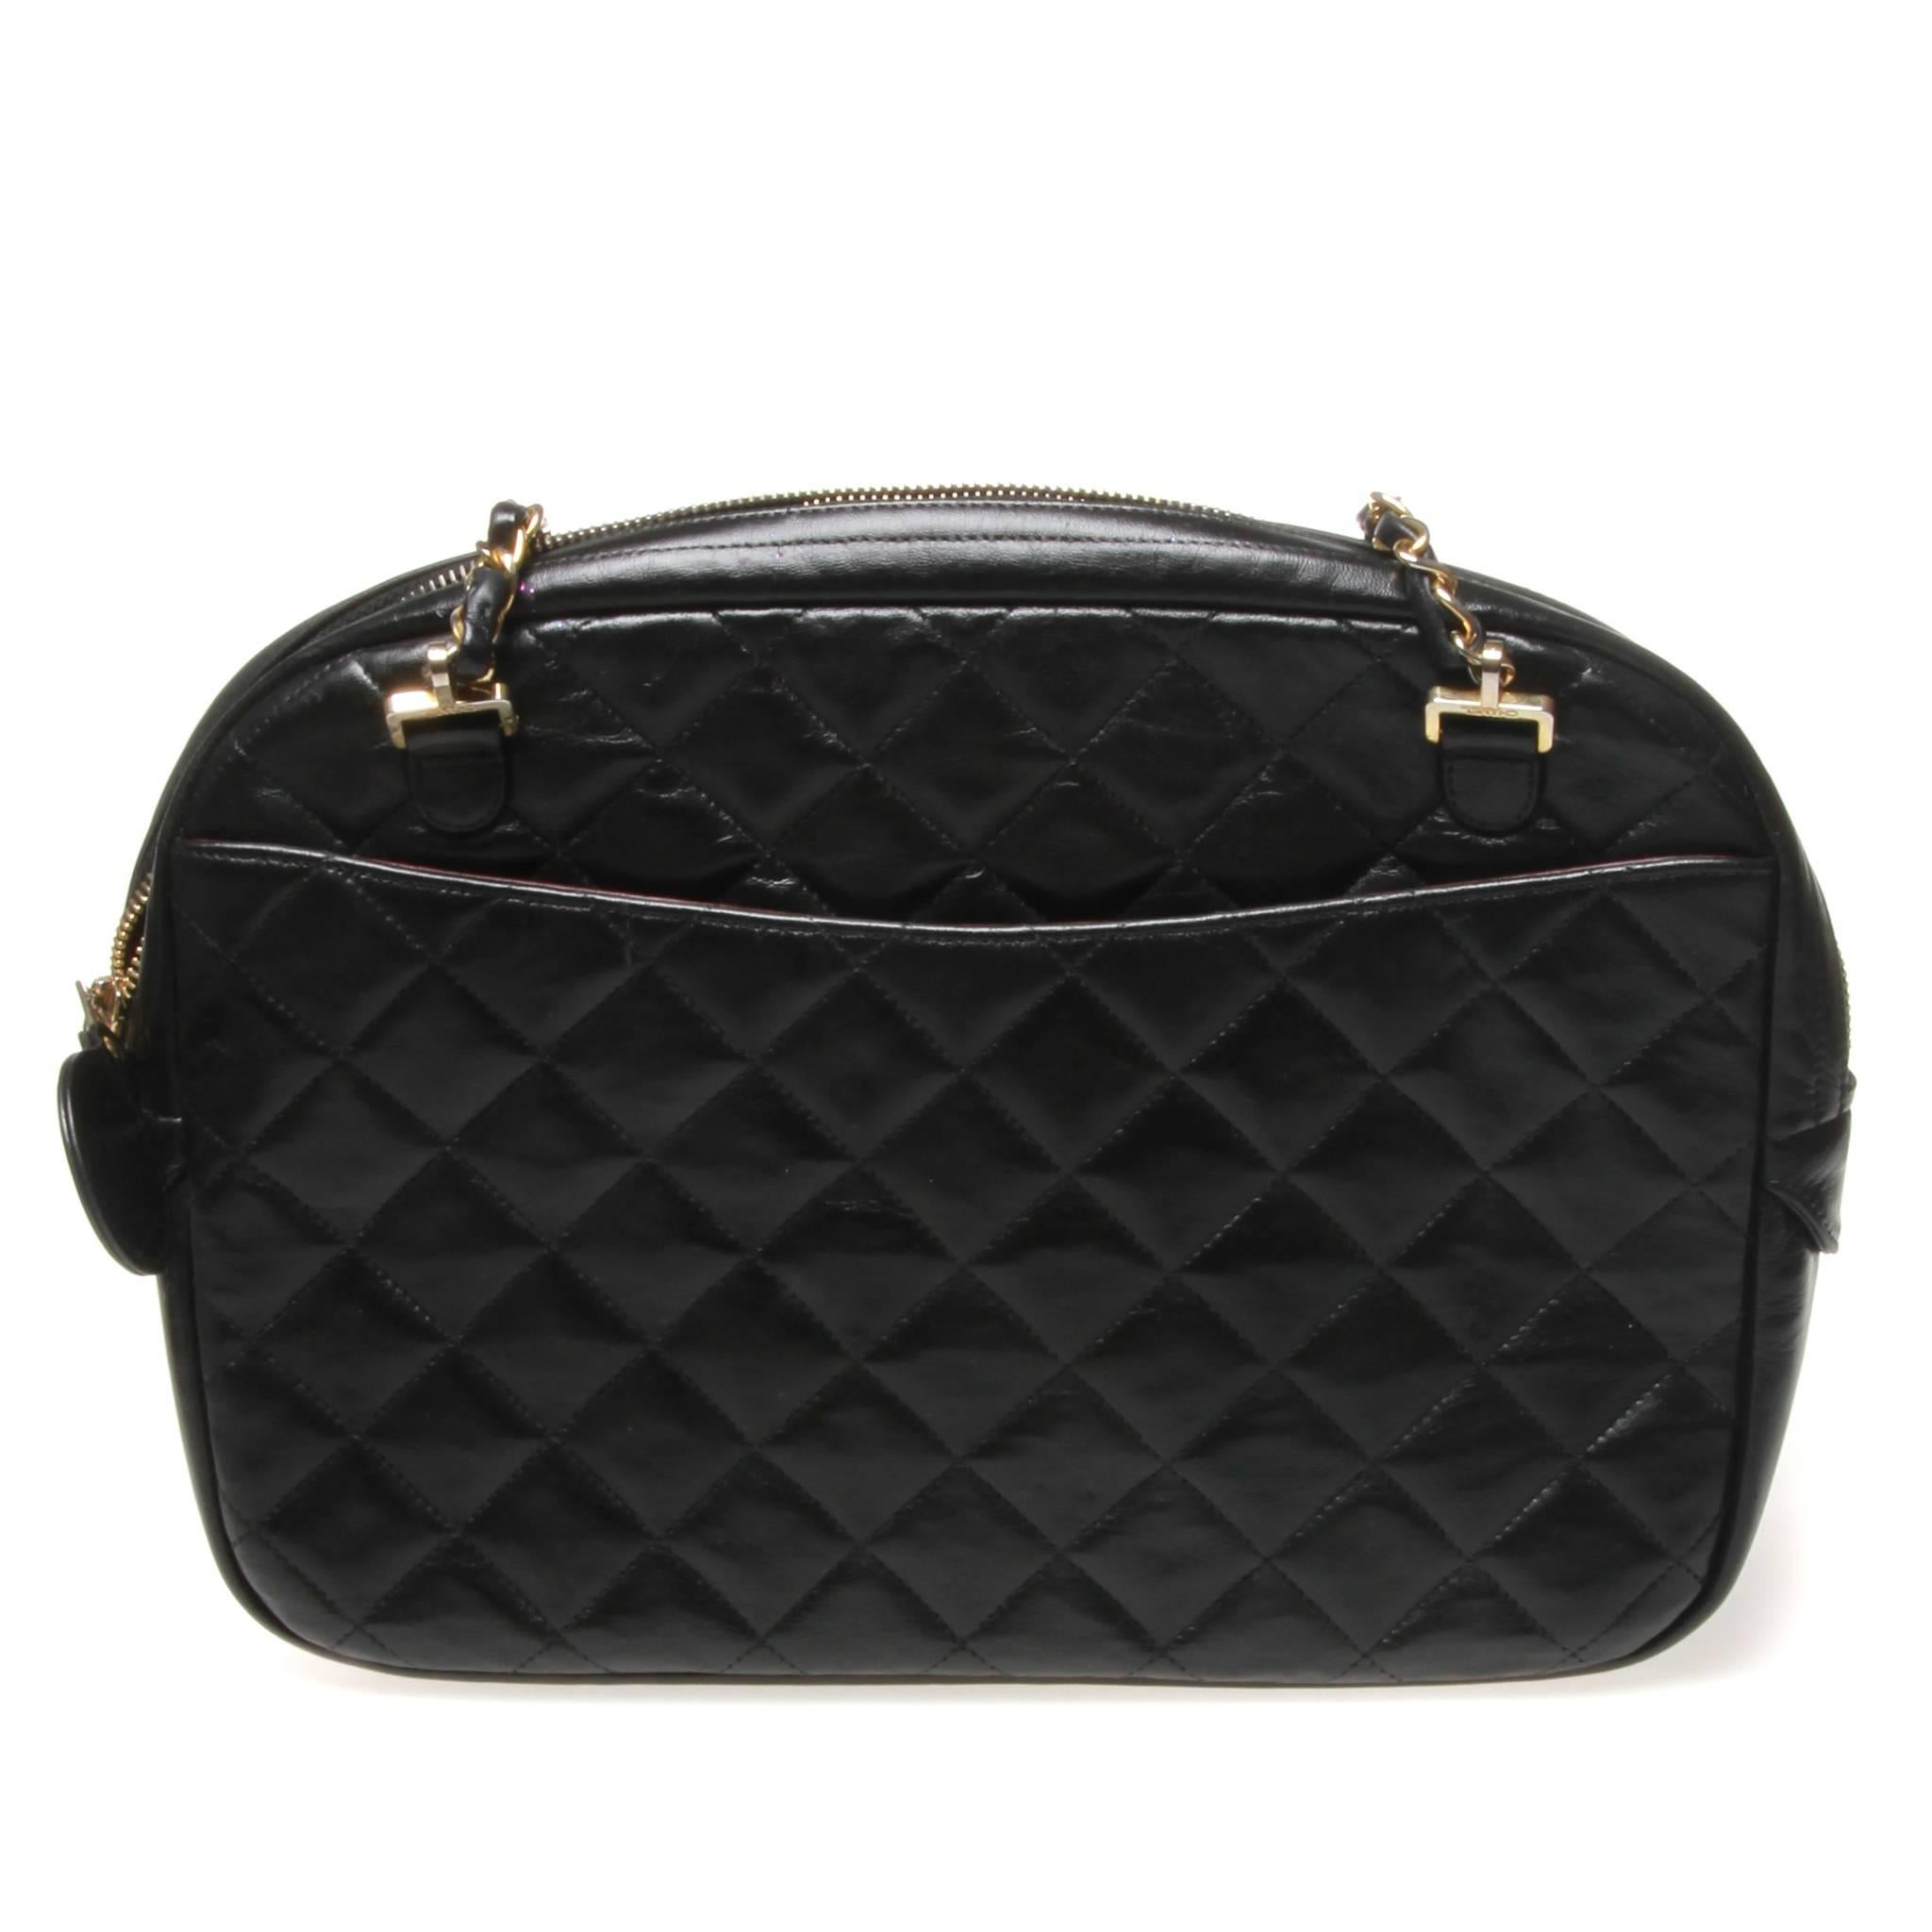 Black Chanel Medium Quilted Camera Bag 